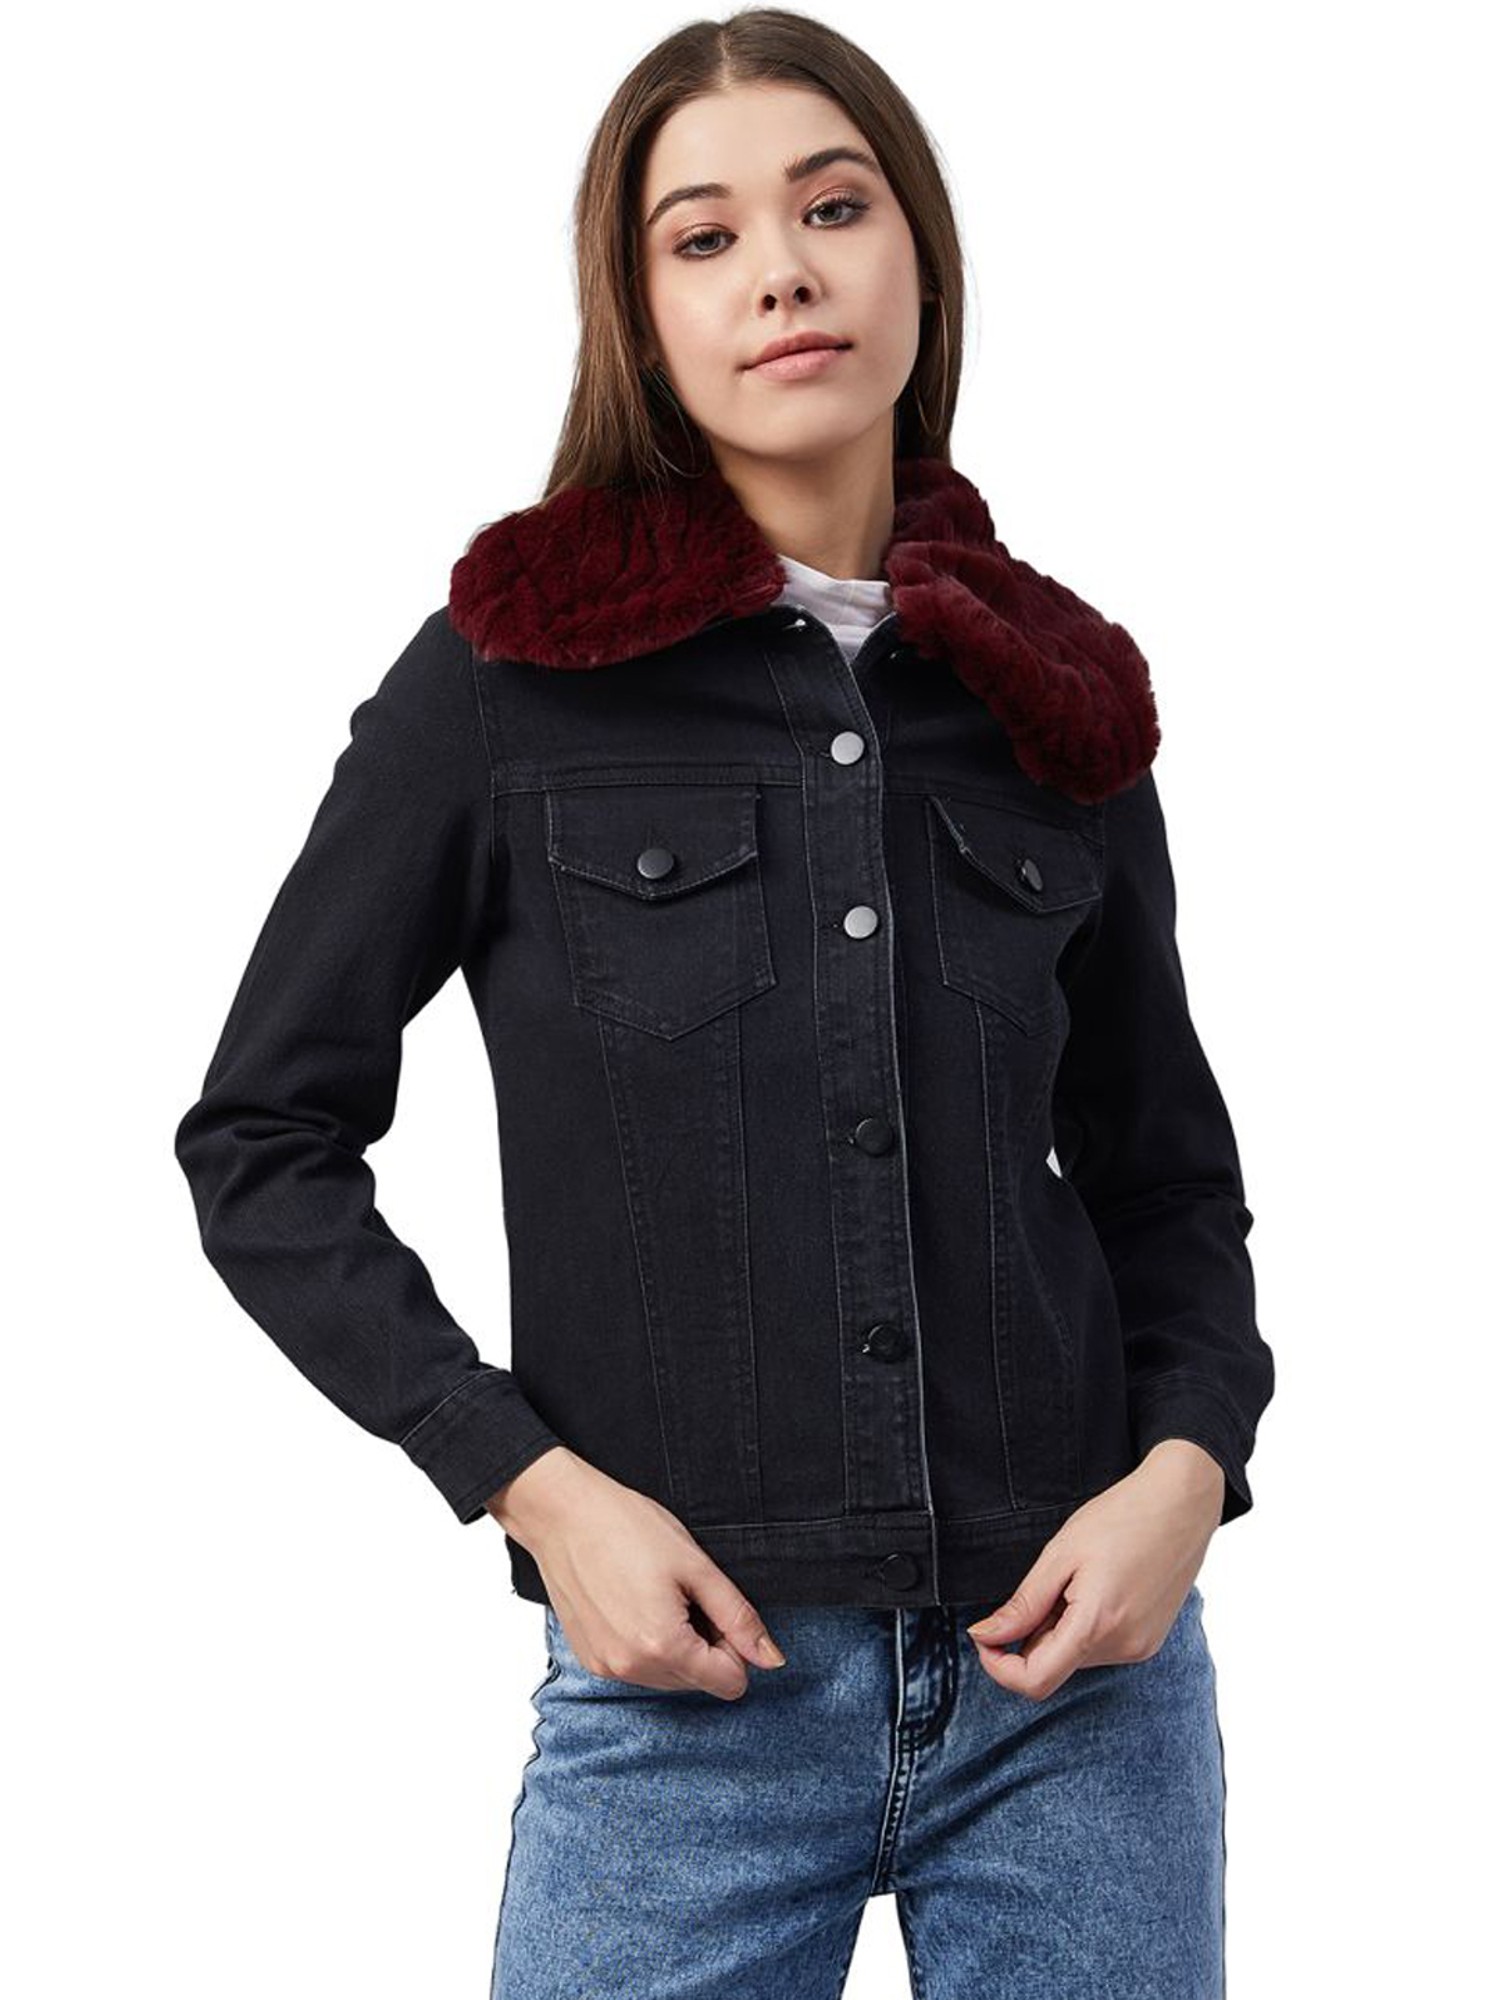 Giacca nice denim jacket faux fur collar size M dark blue and brown NEW |  eBay